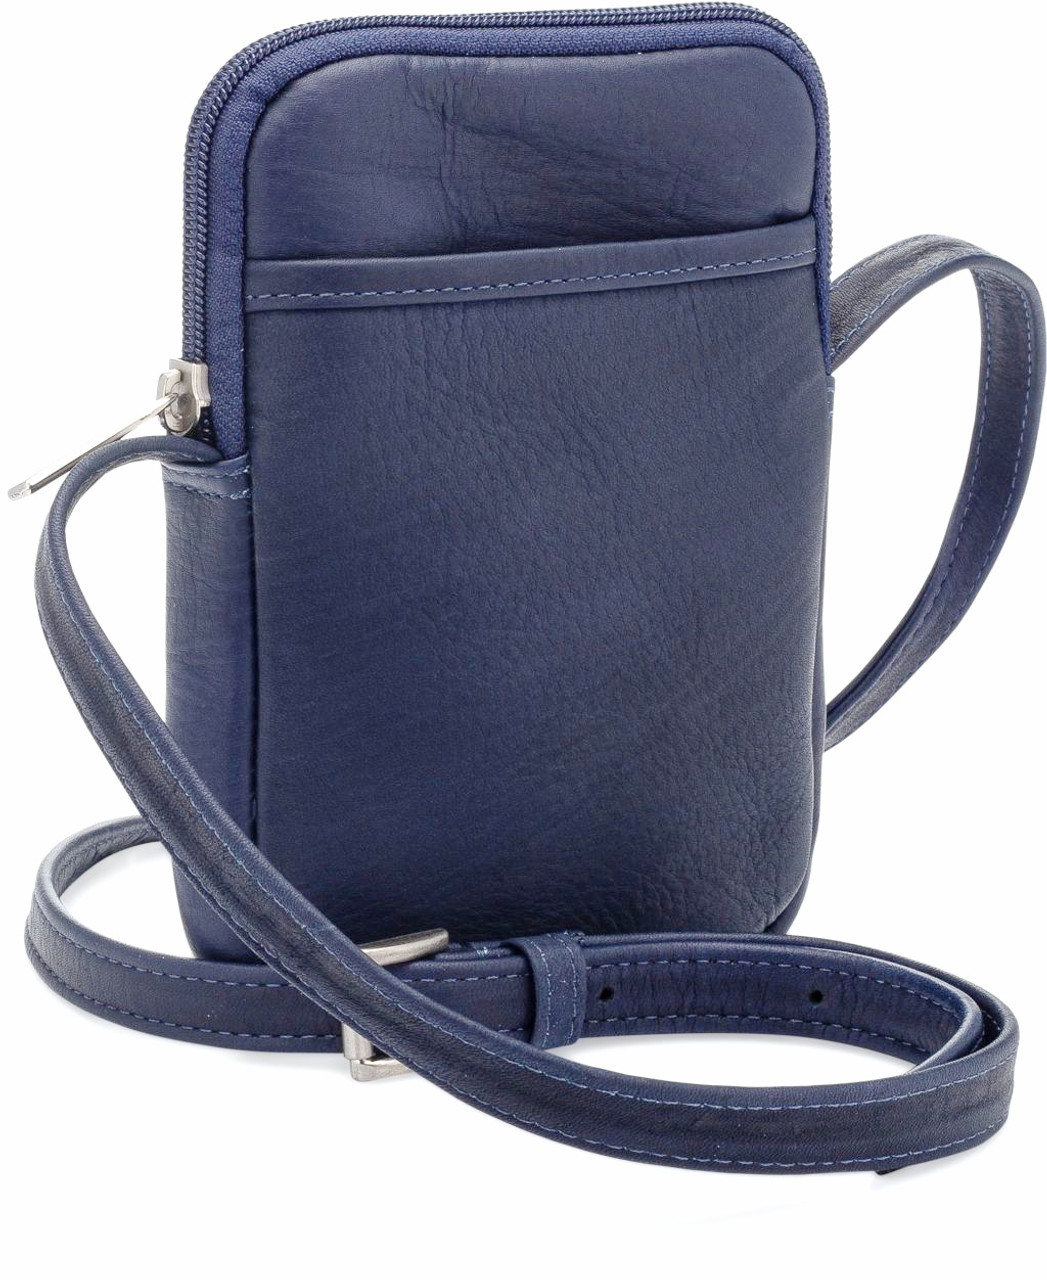 when @celesta  handbag 👑 inspires you to order your first polène